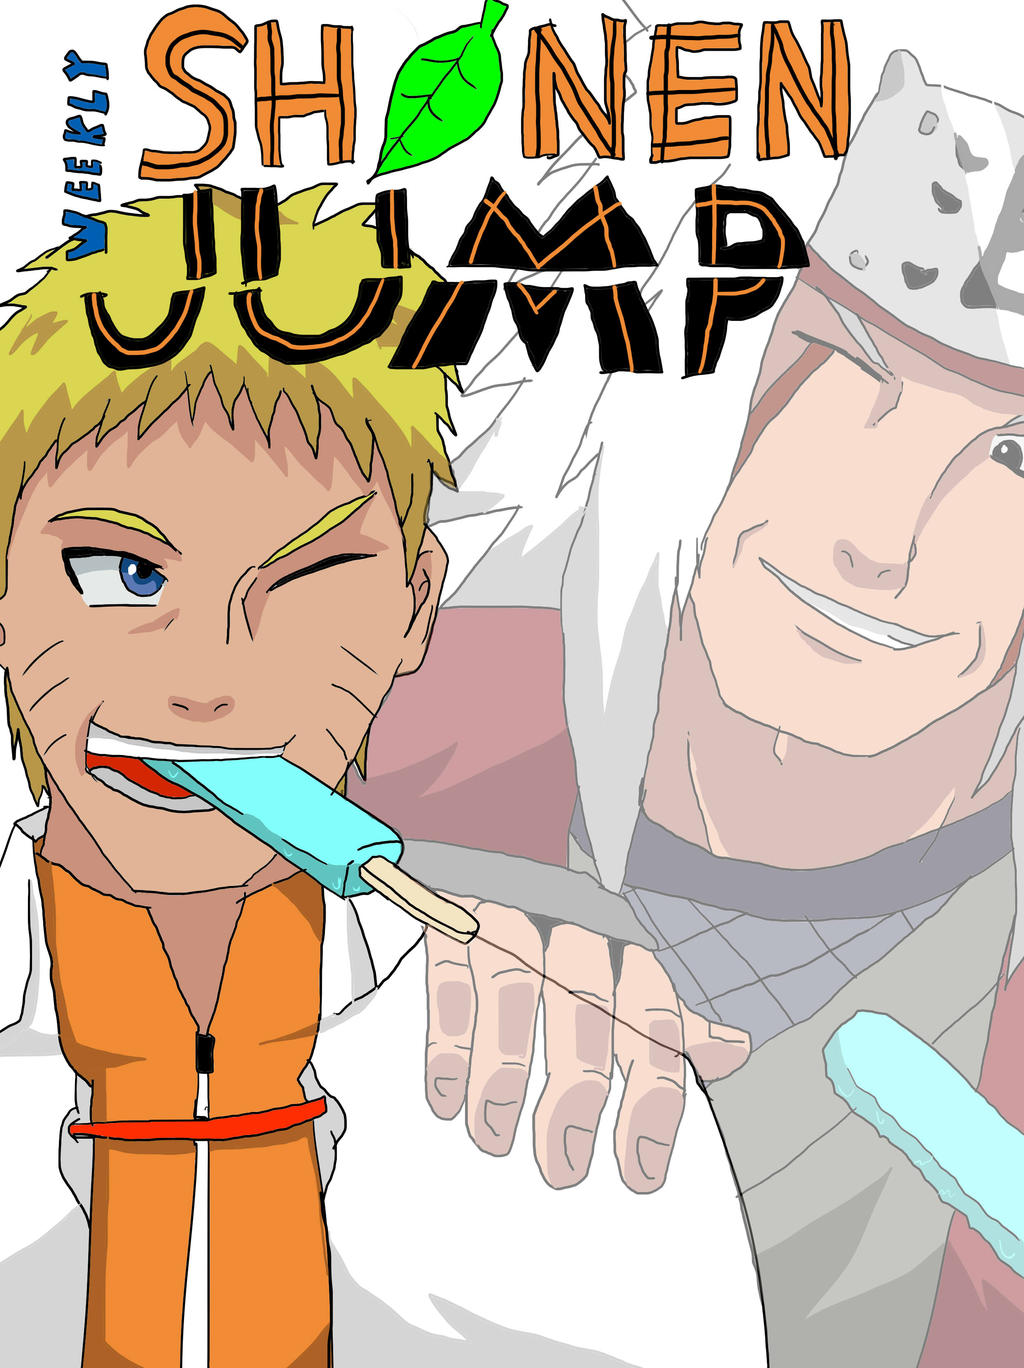 SHONEN JUMP: Naruto Fanart Cover